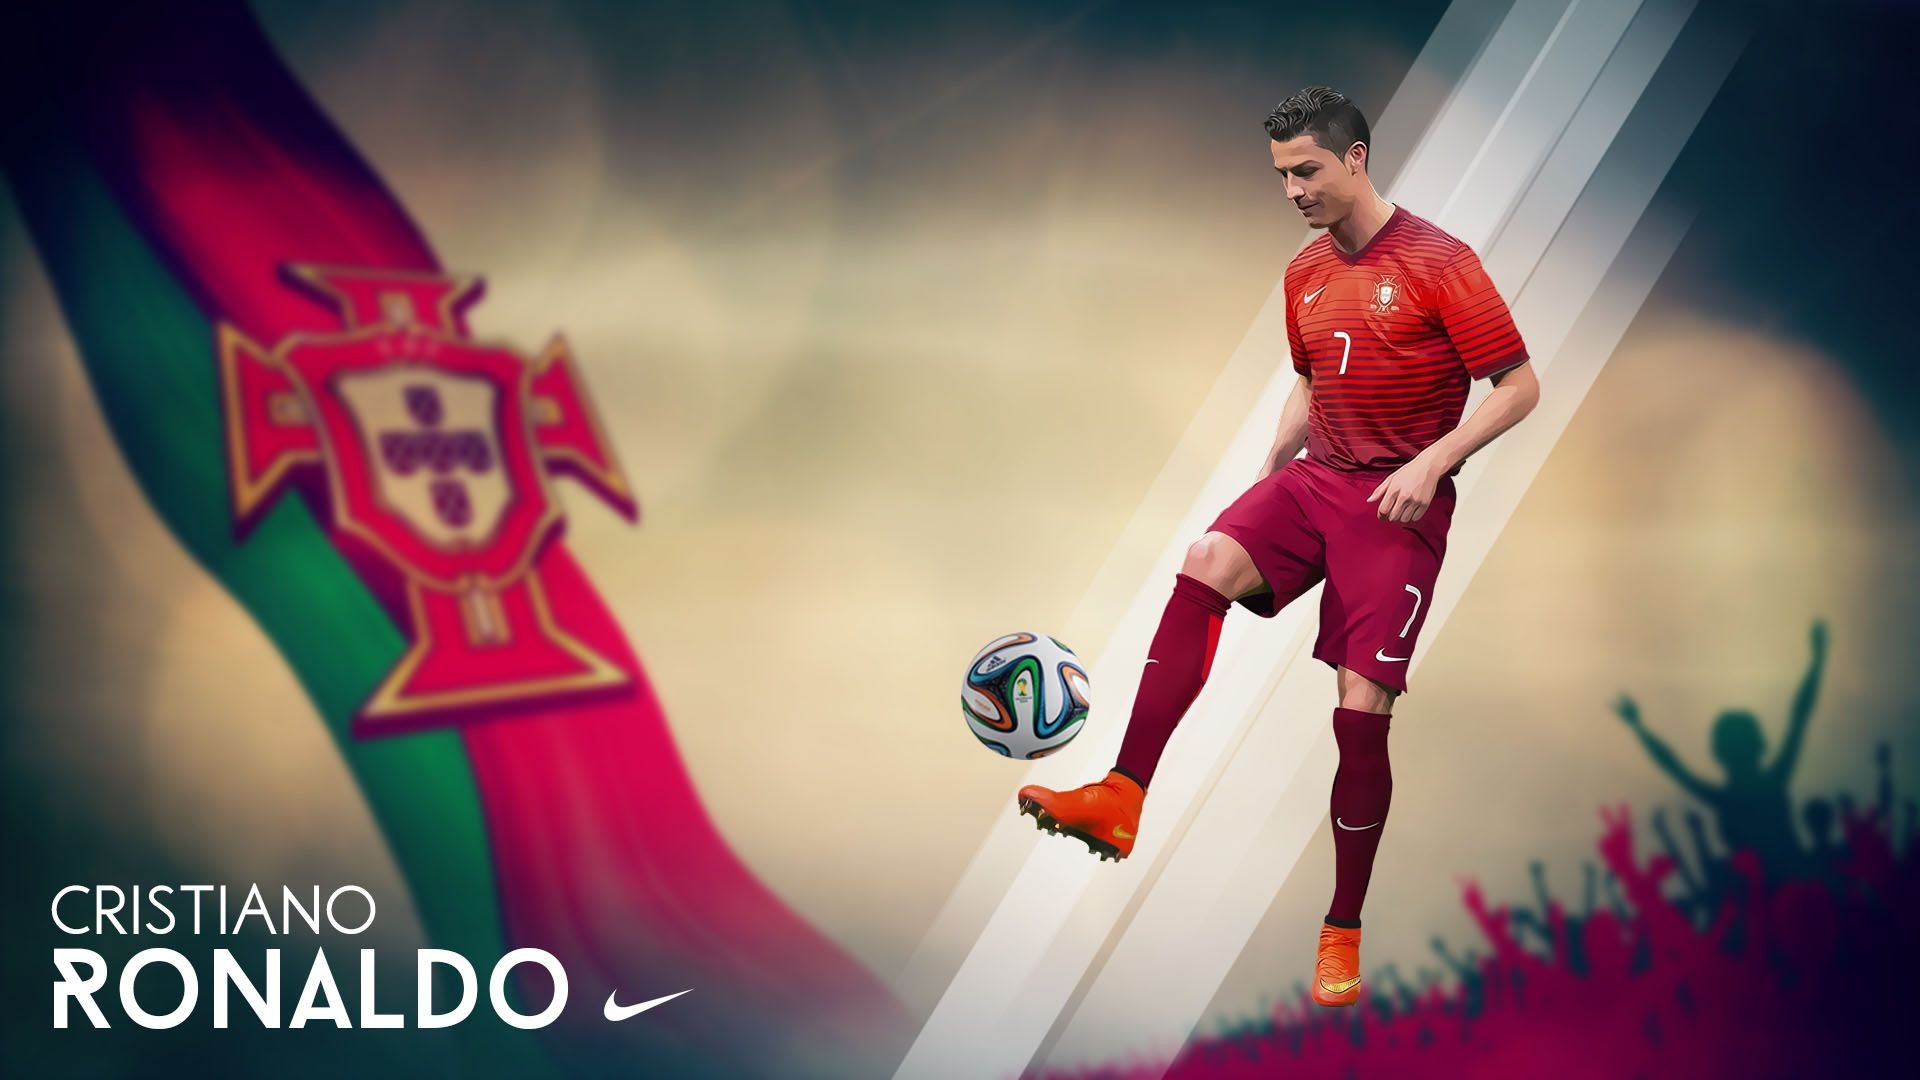 HD Ronaldo Image Number Ball Jersey Laliga Vavosmi Madrid